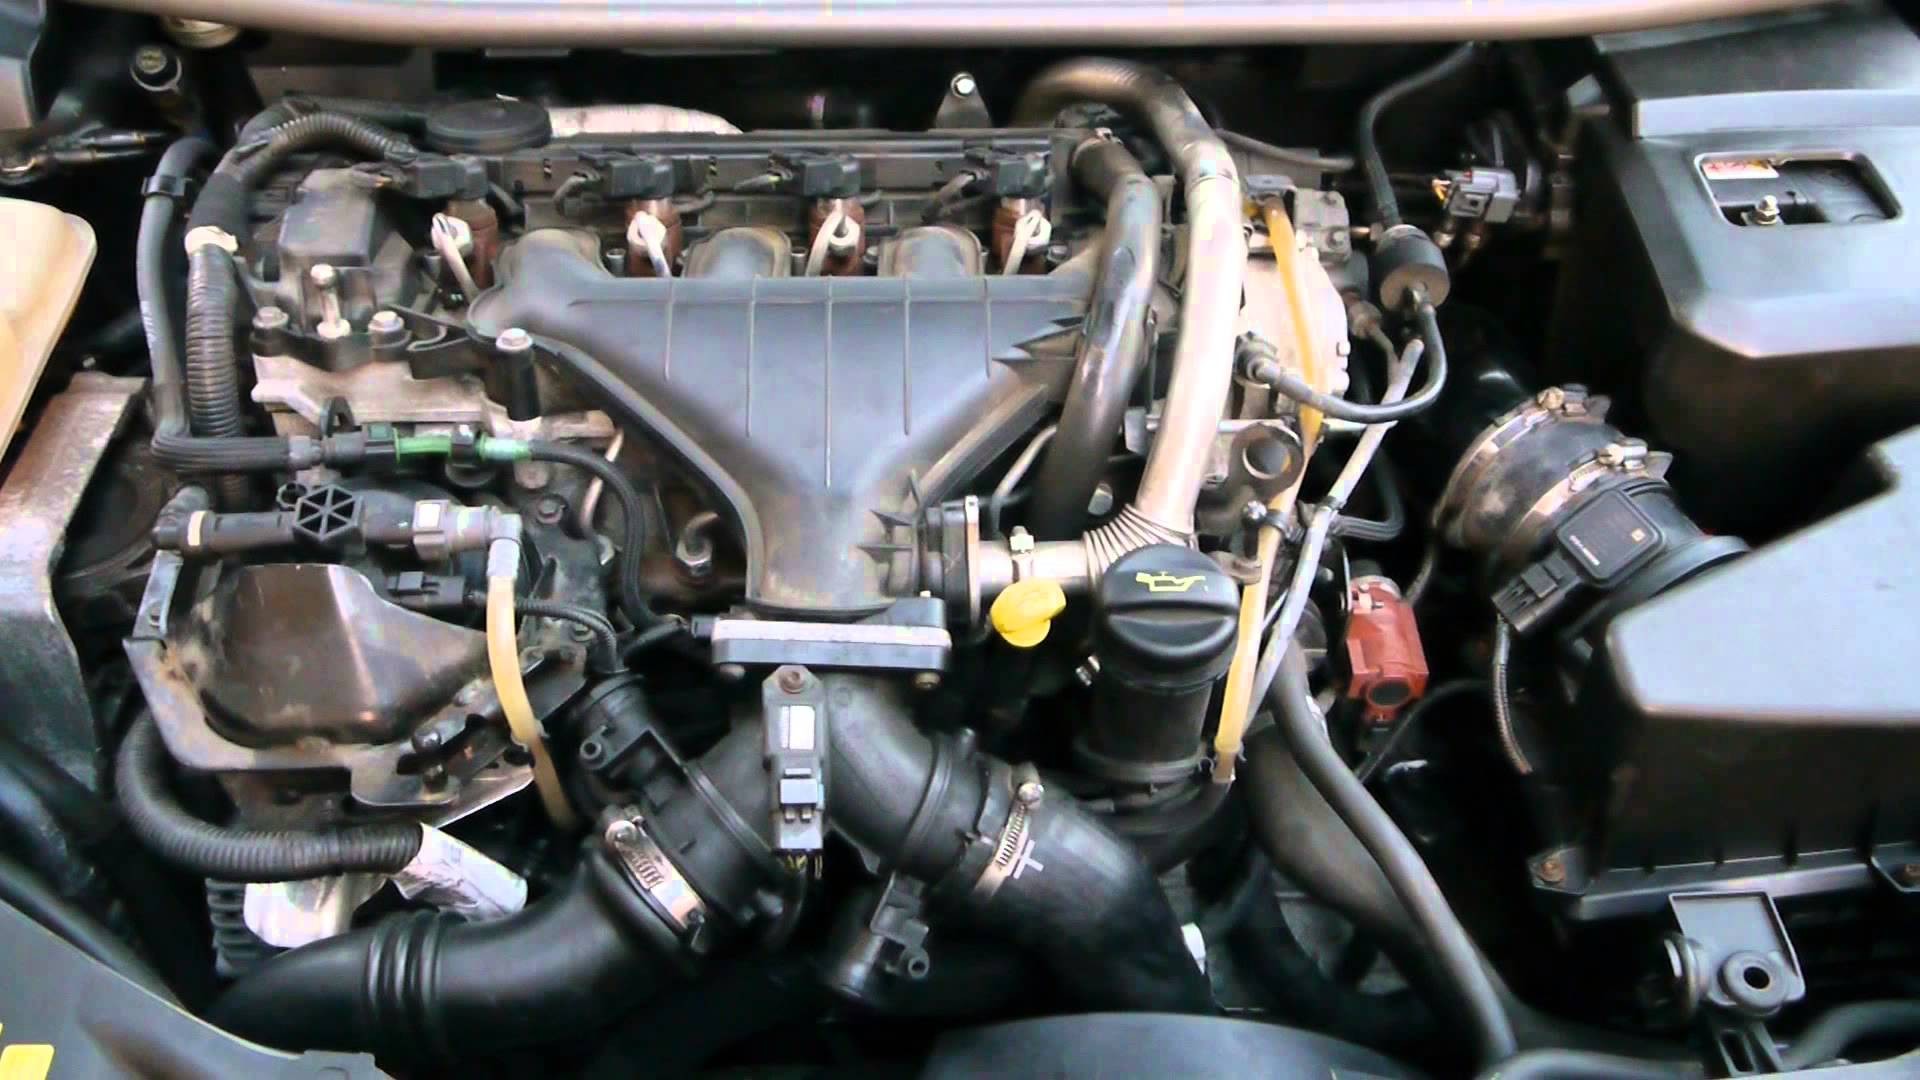 Volvo V50 Engine Diagram Problems with Volvo V50 Engine False Start but Runs Ok 14 11 2012